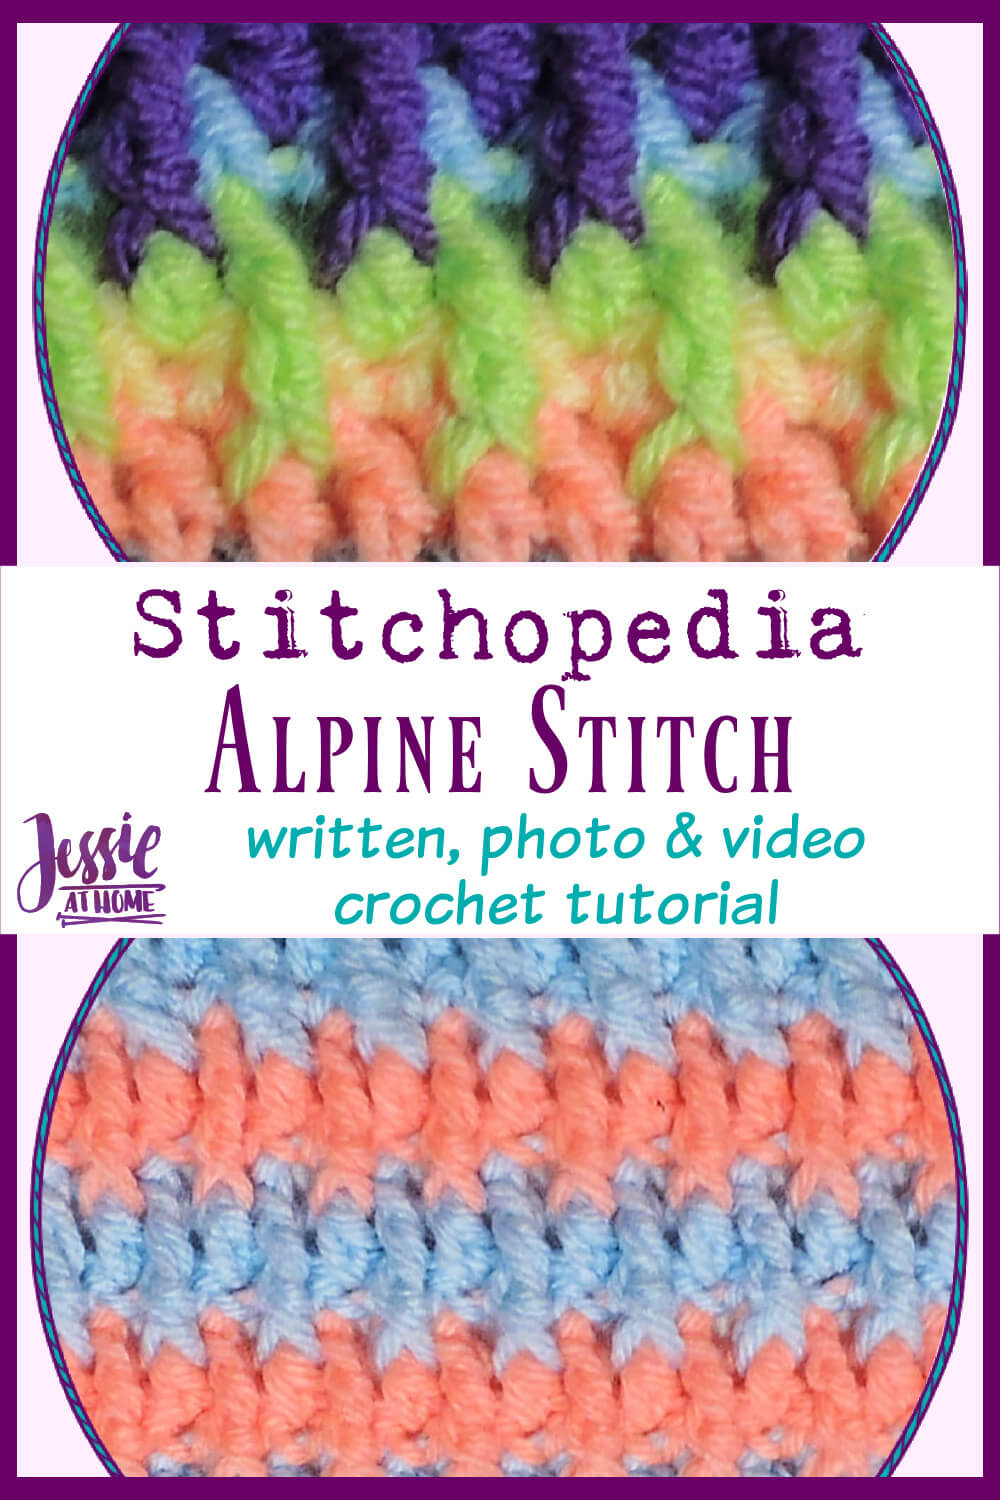 Alpine Stitch - written, photo, and video crochet tutorial